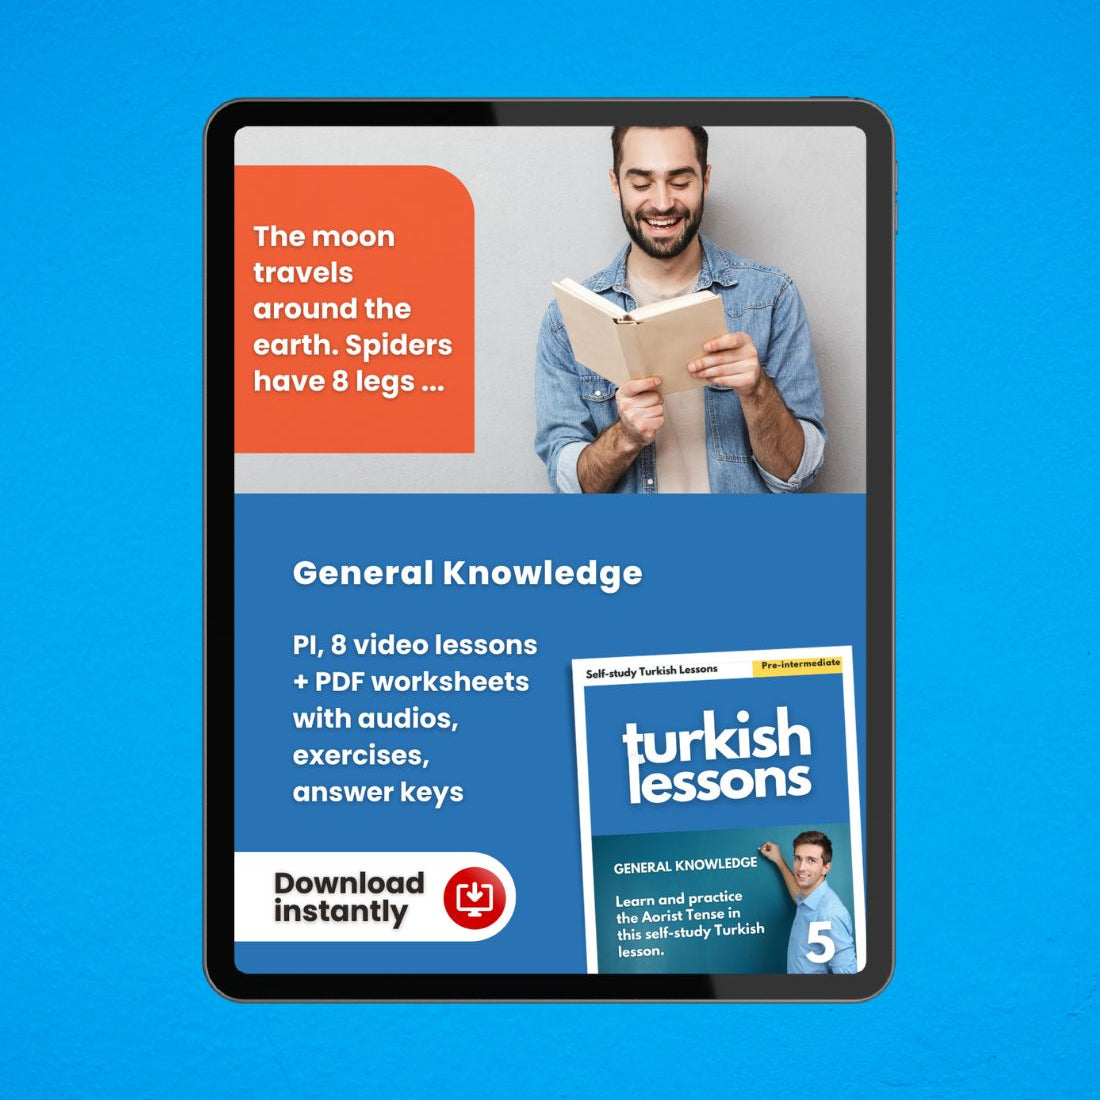 turkish lessons - general knowledge in turkish language